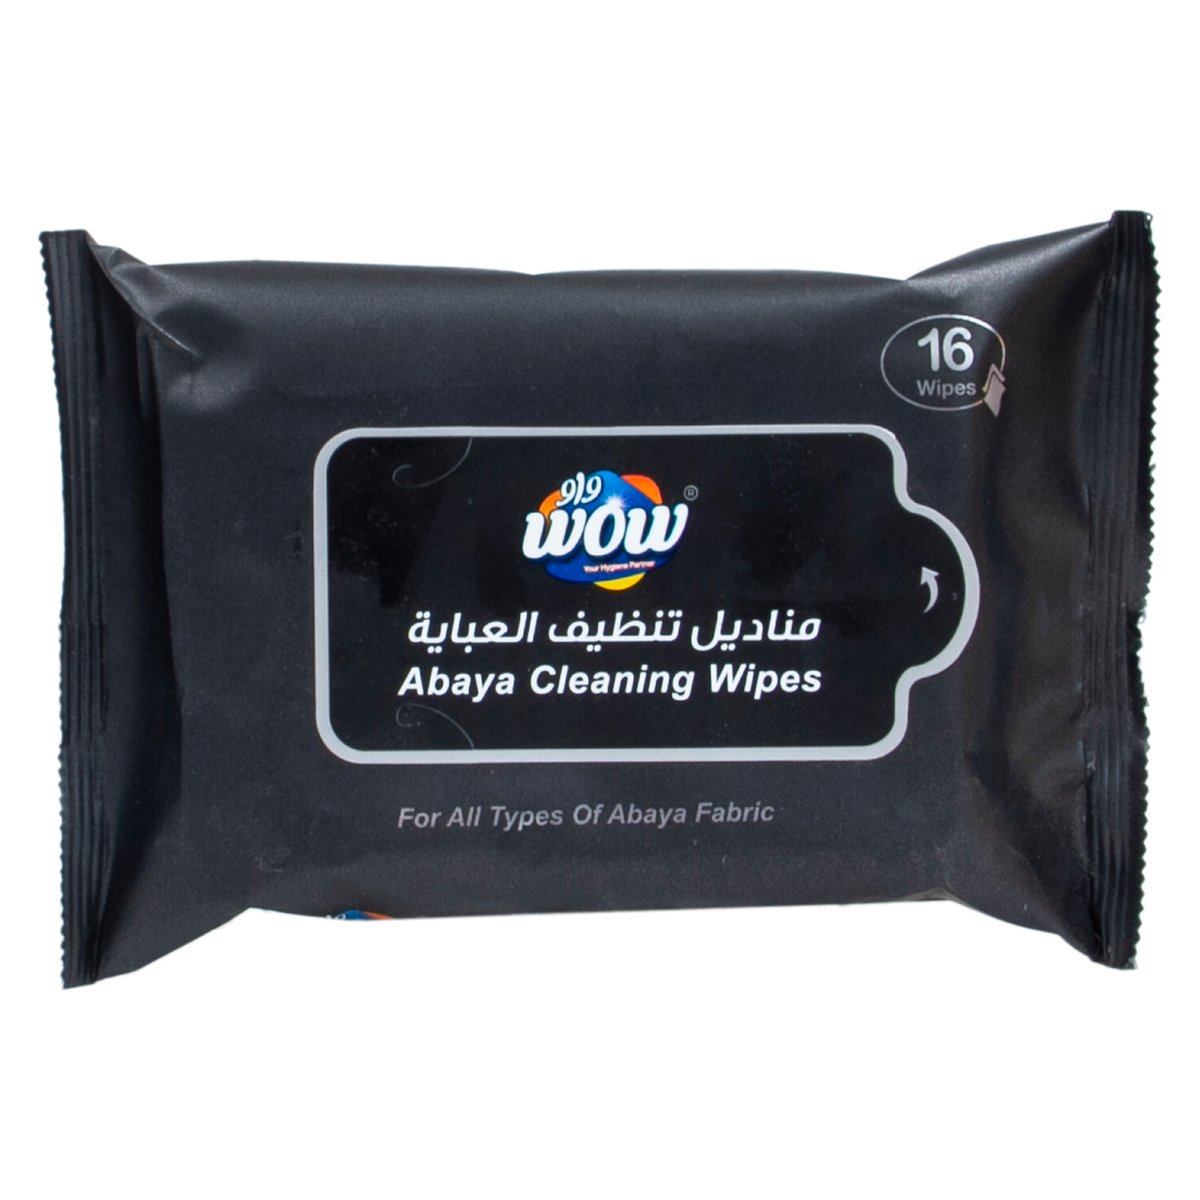 Wow Abaya Cleaning Wipes 16pcs